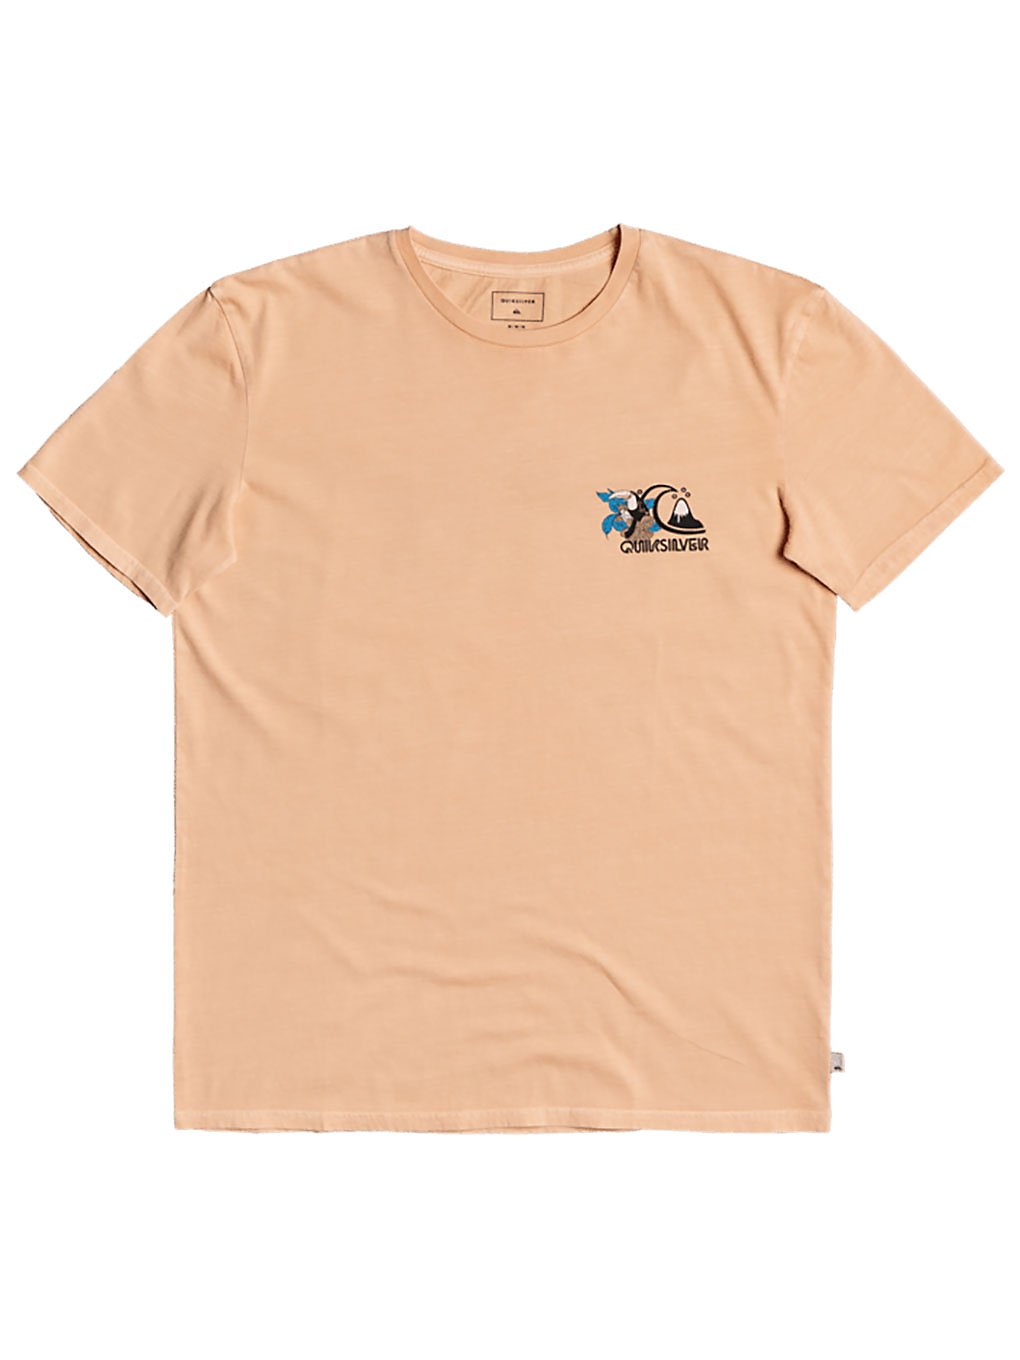 Quiksilver Informal Disco T-Shirt apricot